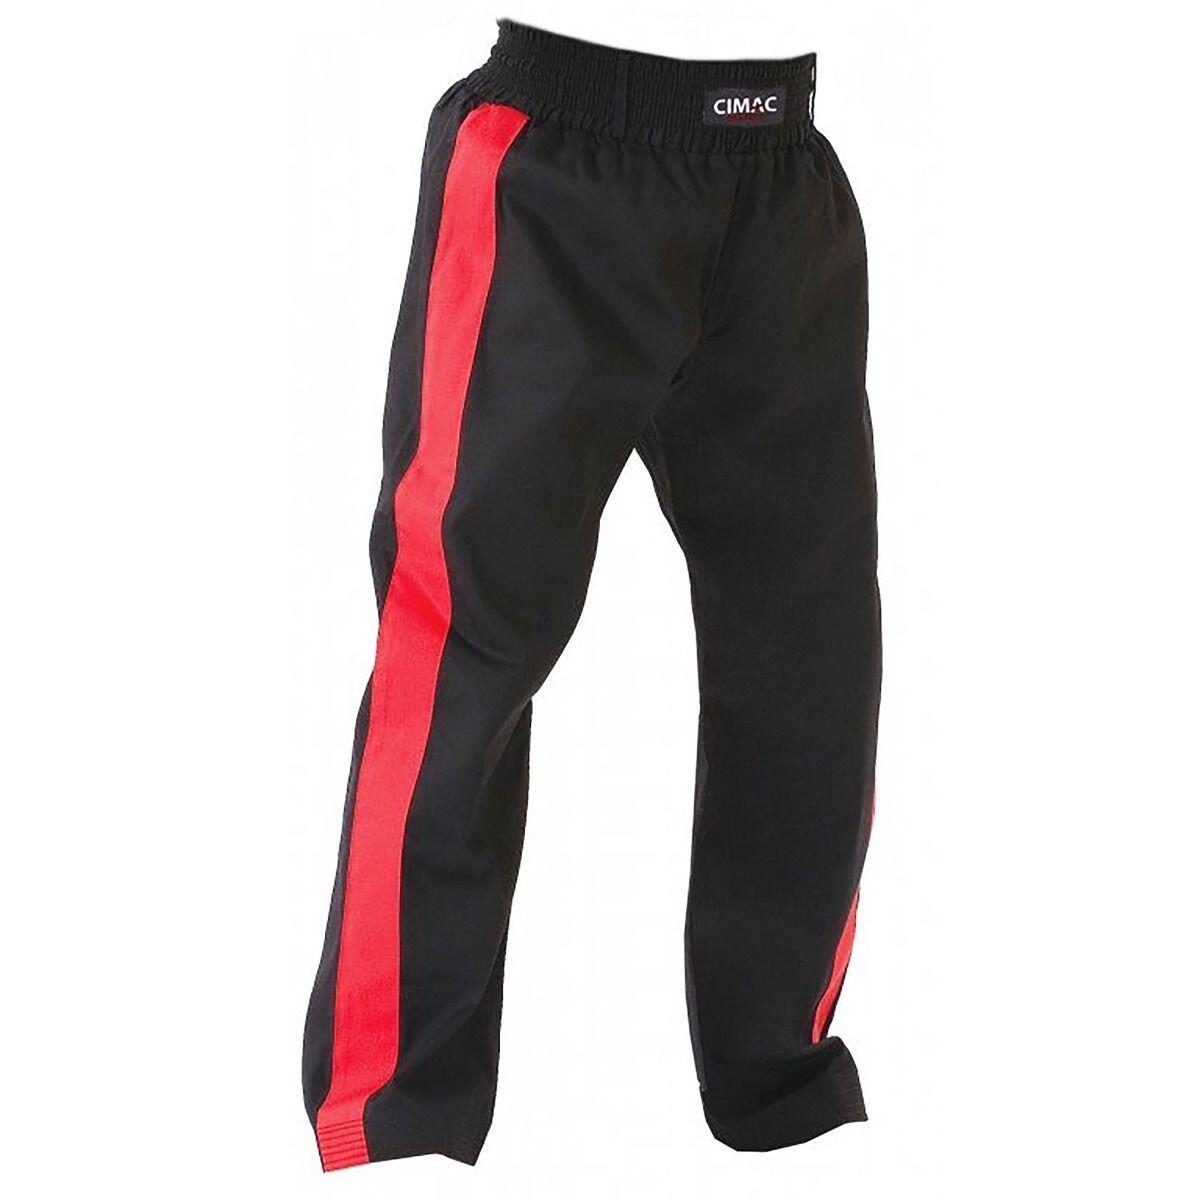 CIMAC Cimac Kickboxing Trousers - Black/Red - Adult & Kids